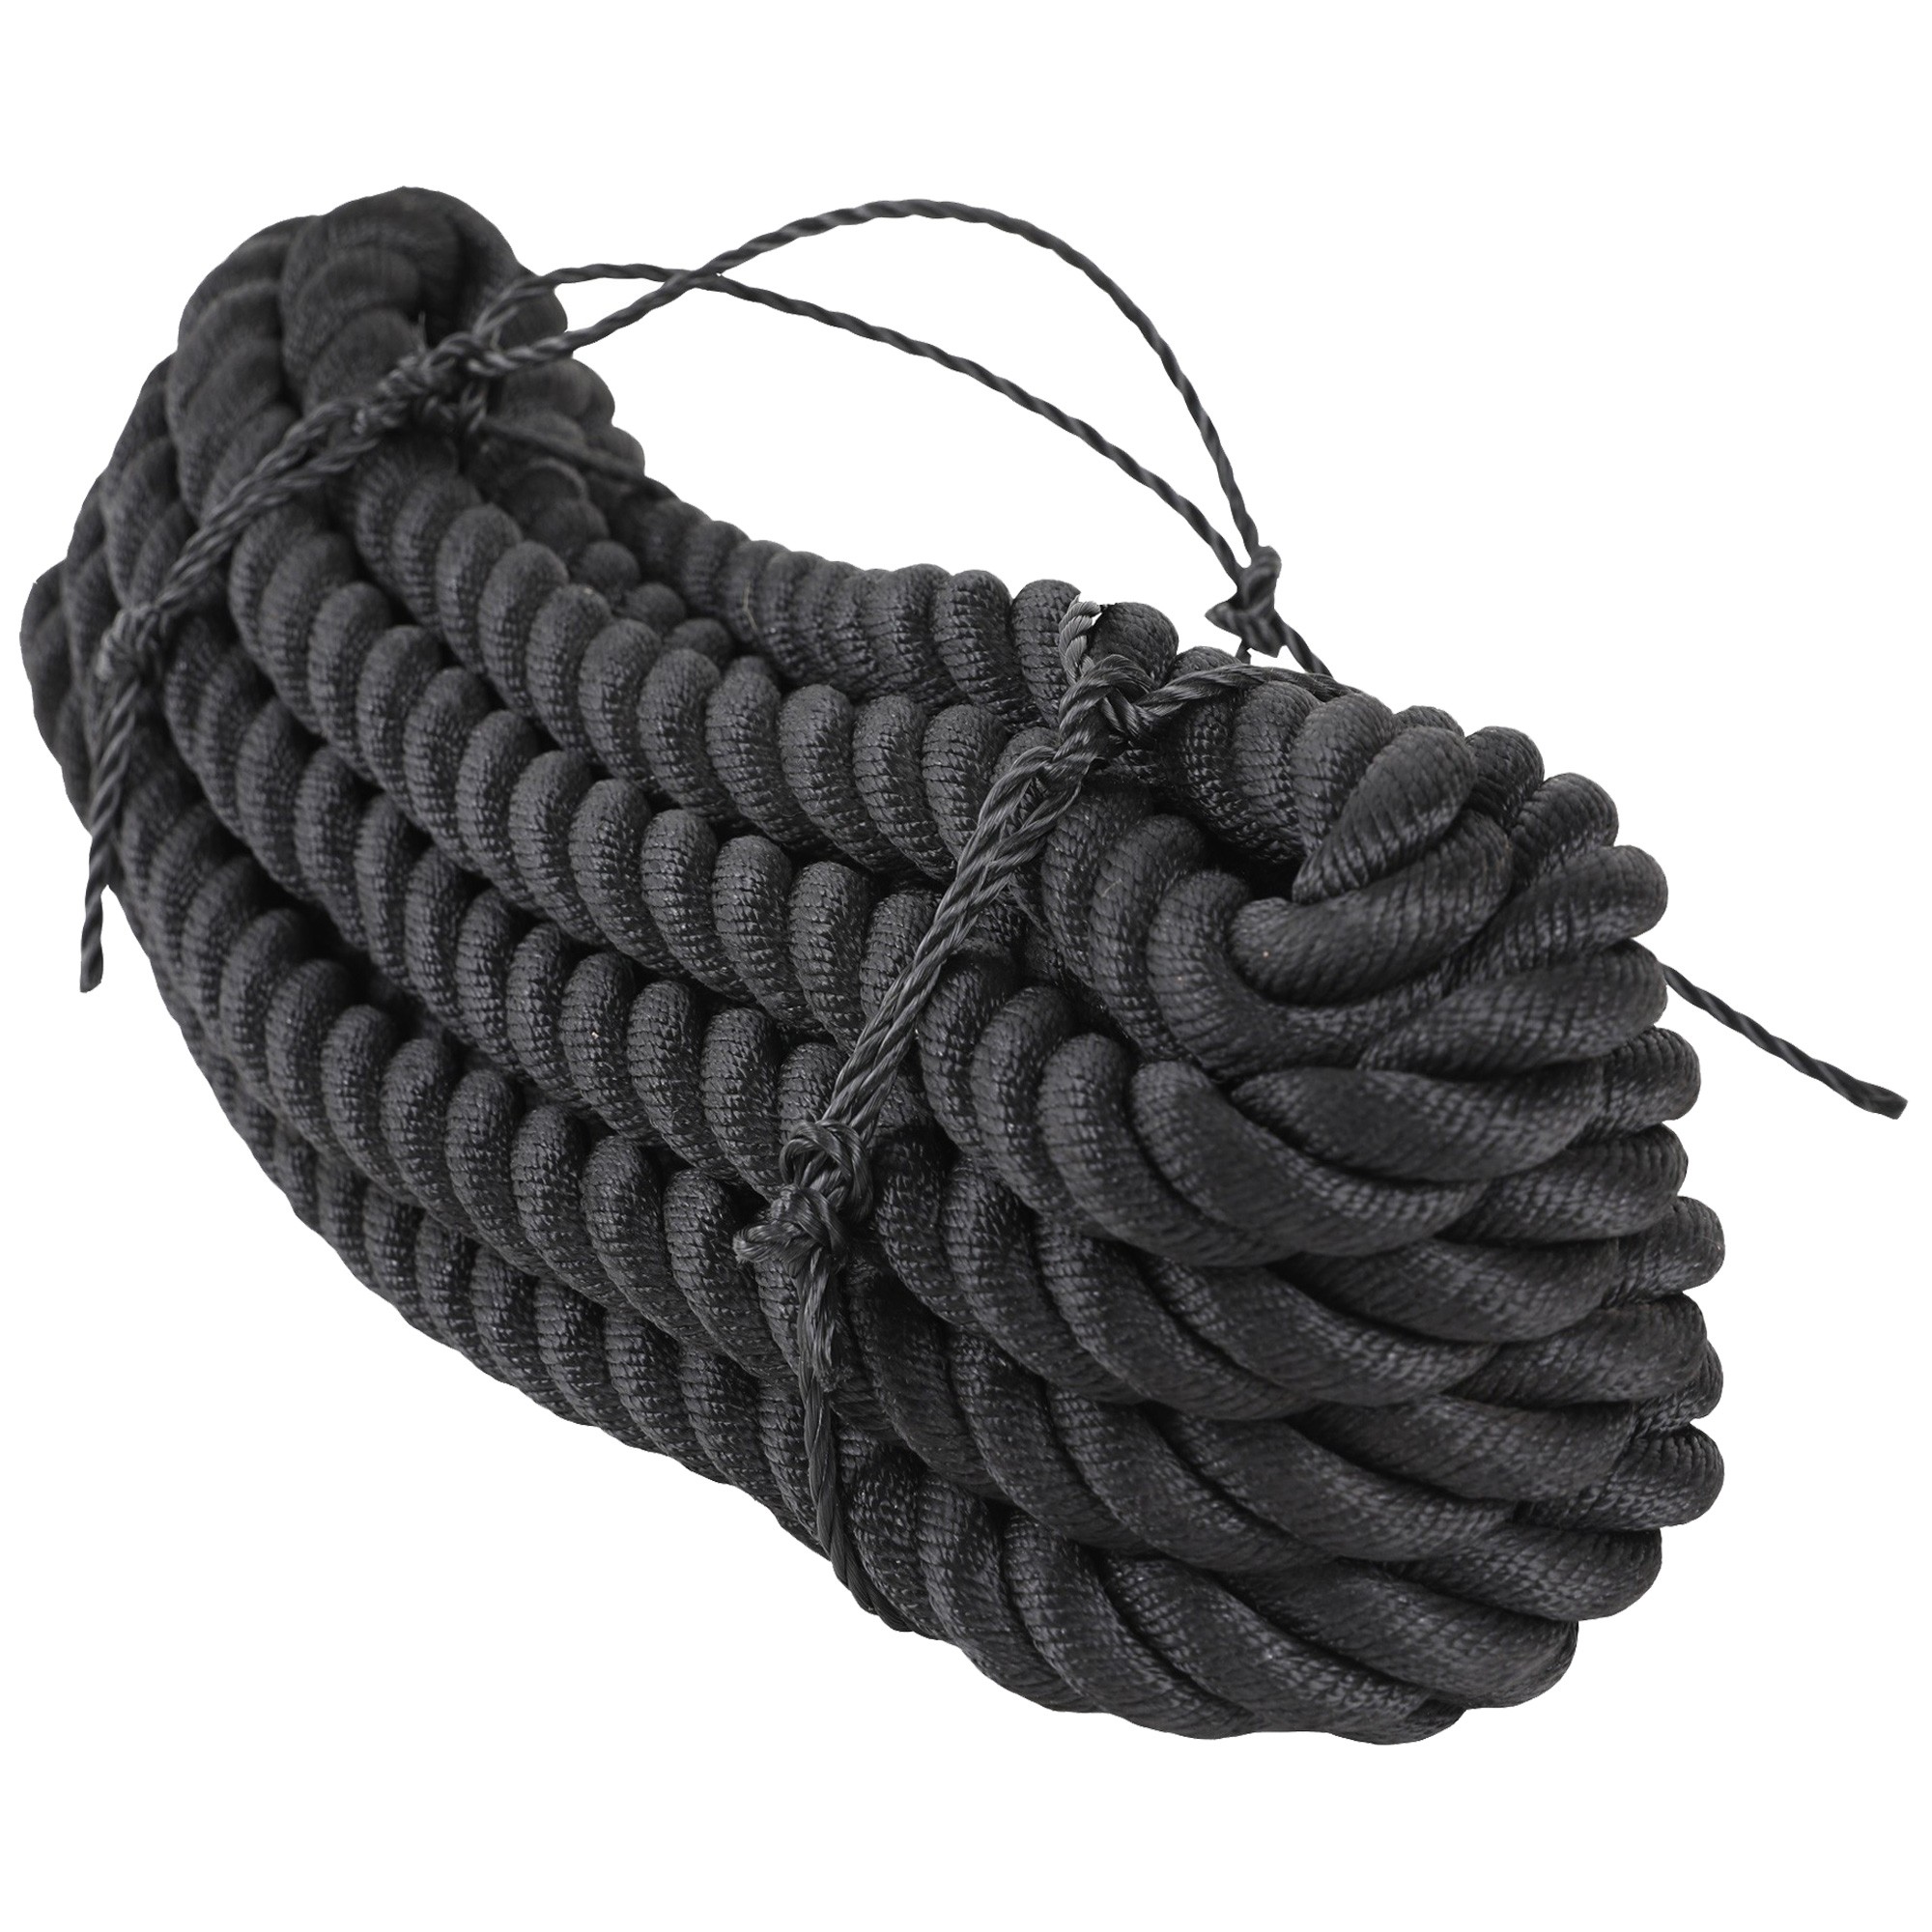 Corde ondulatoire sporti 10 m (diam. 2,6 cm)